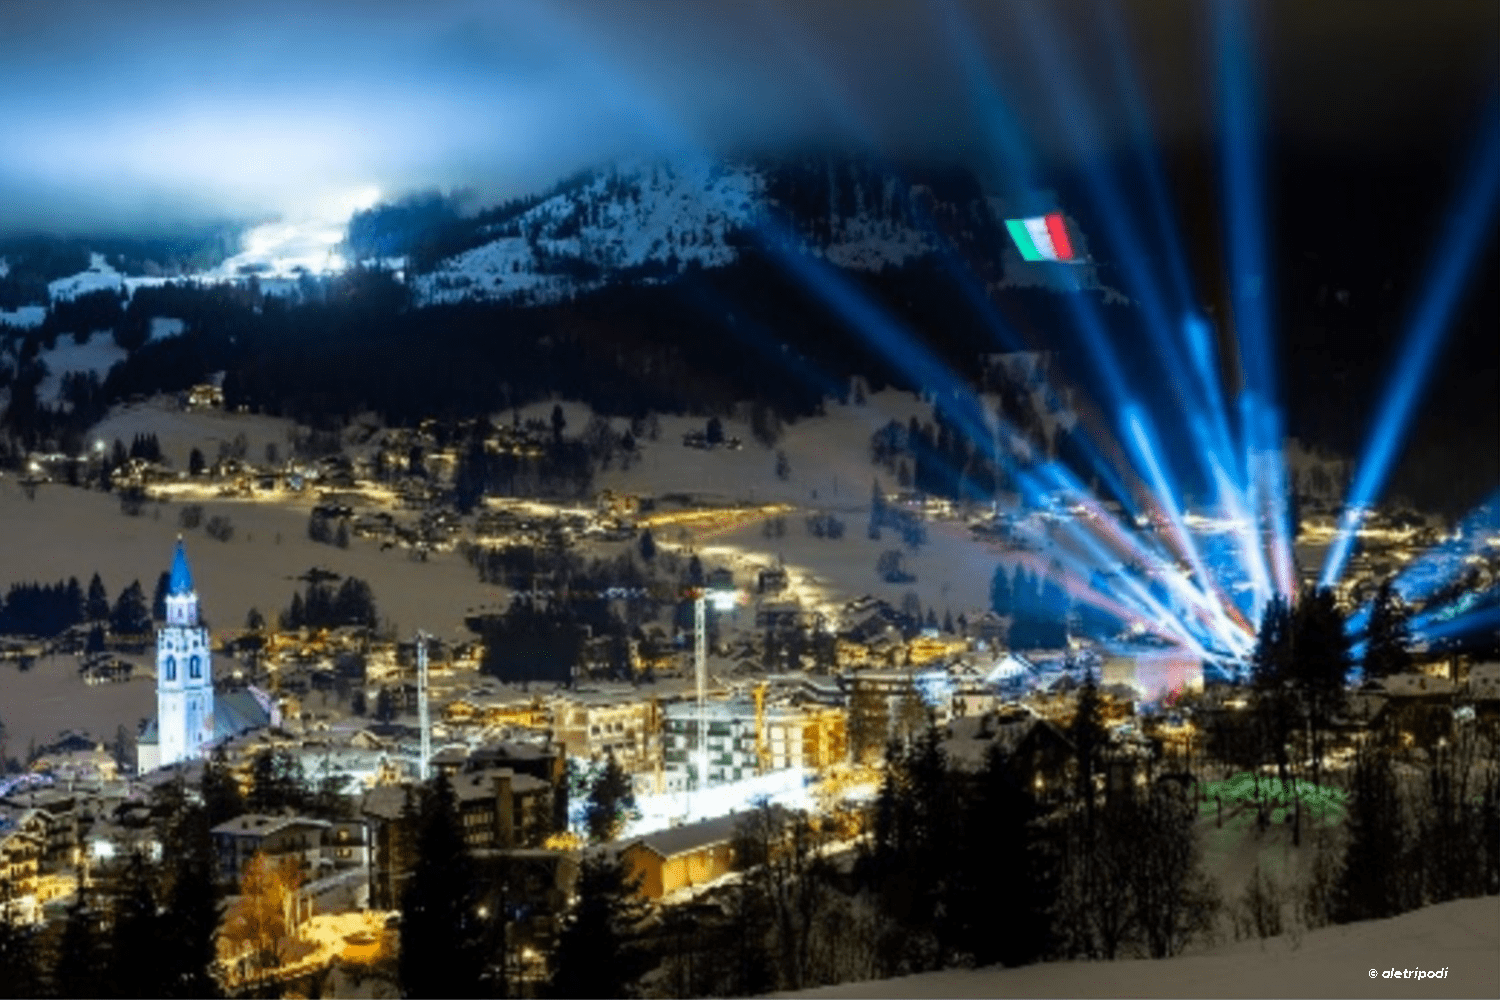 2021 FIS Alpine World Ski Championships – Cerimonia di Apertura